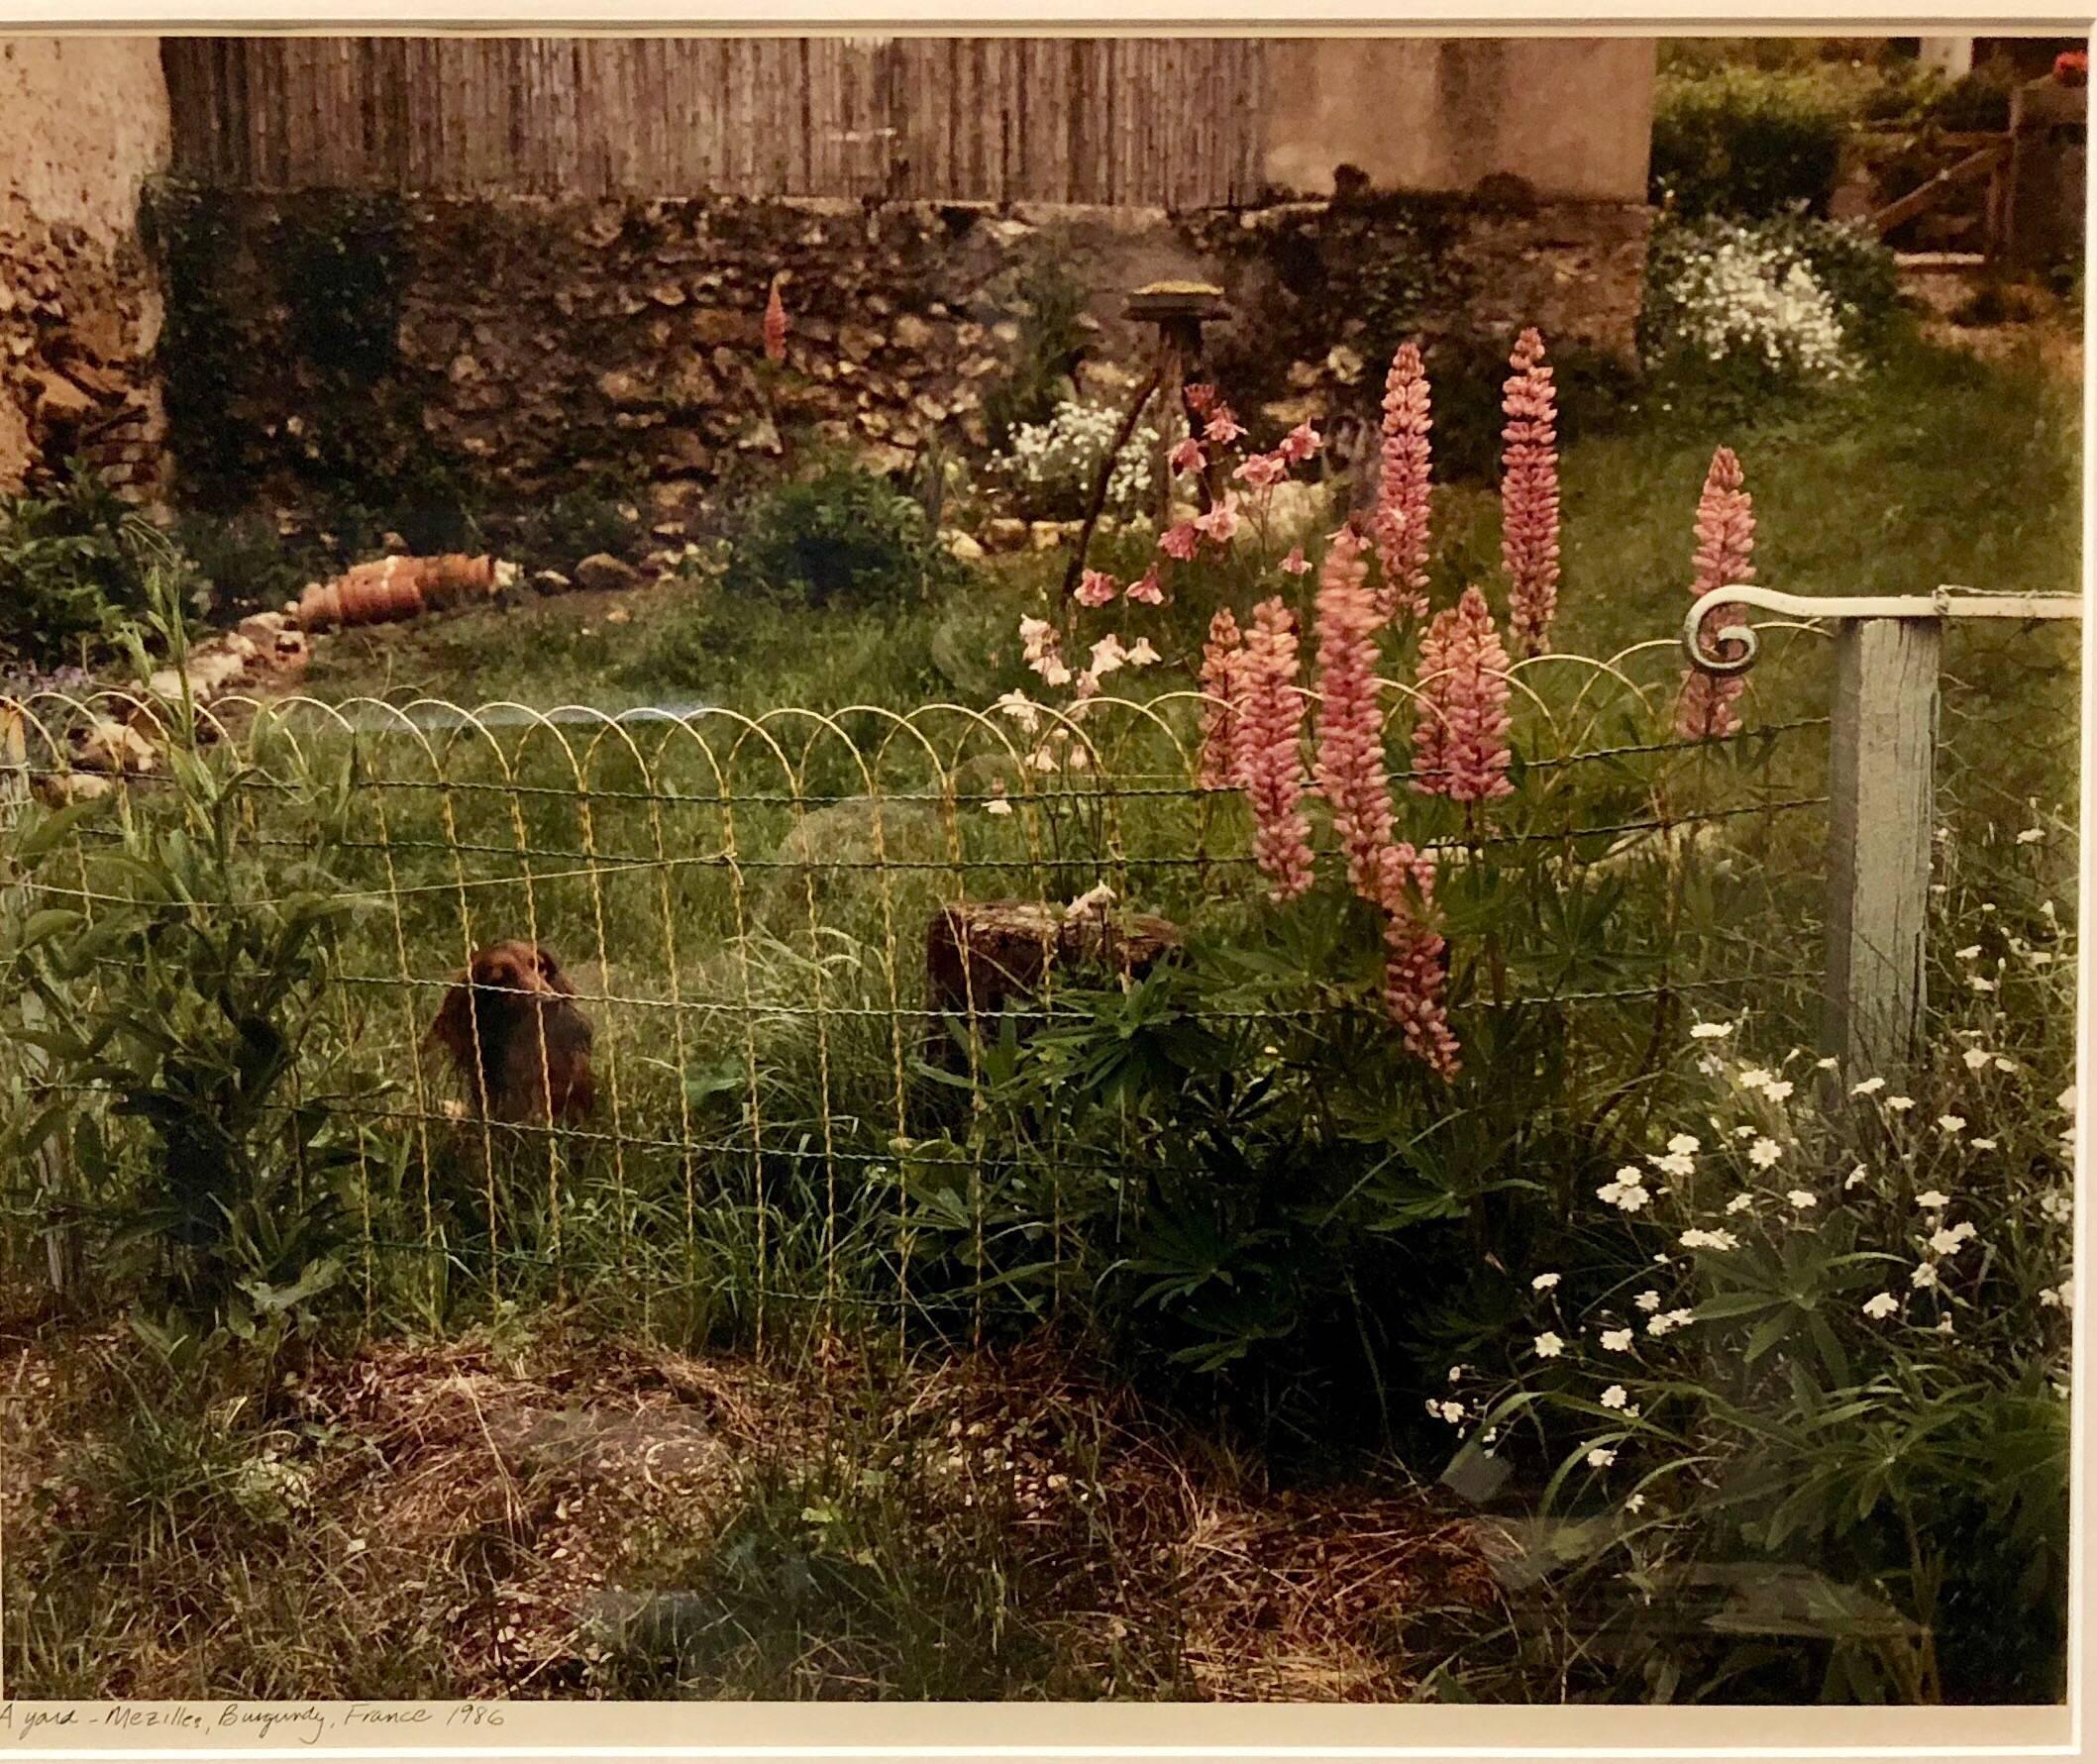 Landscape Photograph Frank Gohlke - A Yard, Mezilles, Bourgogne, France. Photographie couleur vintage « Field Of Flowers », 1986